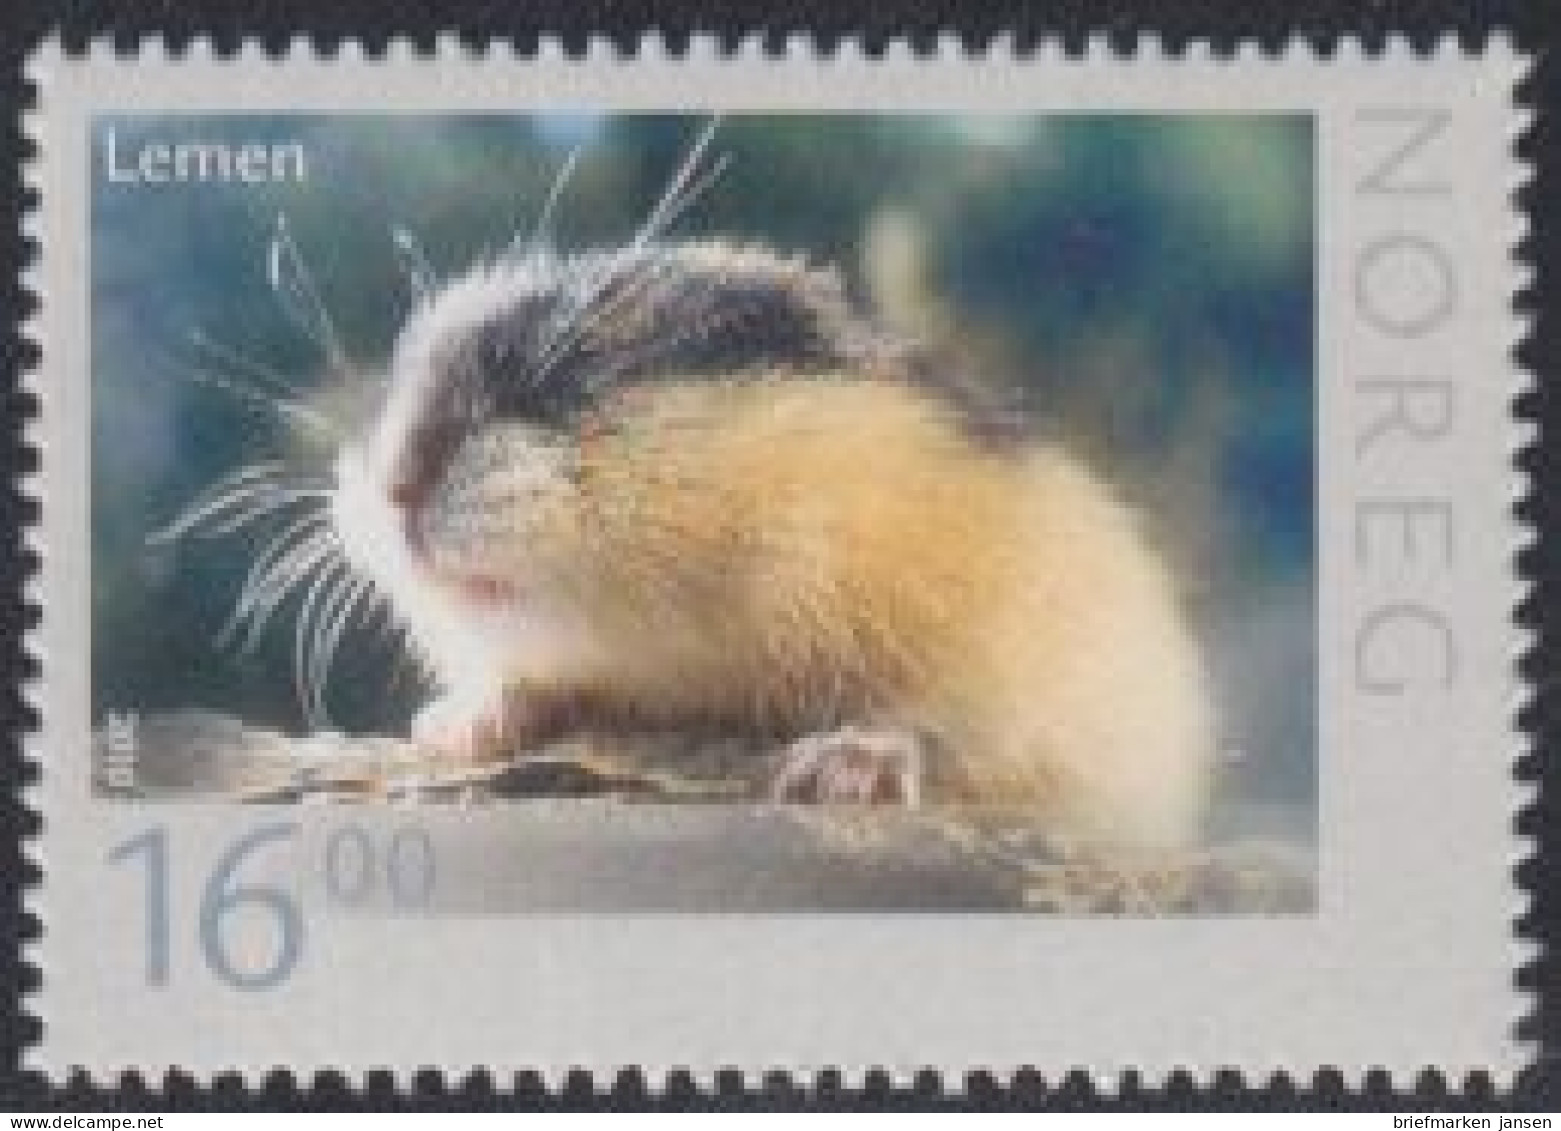 Norwegen Mi.Nr. 1838 Wildlebende Tiere, Berglemming, Skl. (16,00) - Unused Stamps